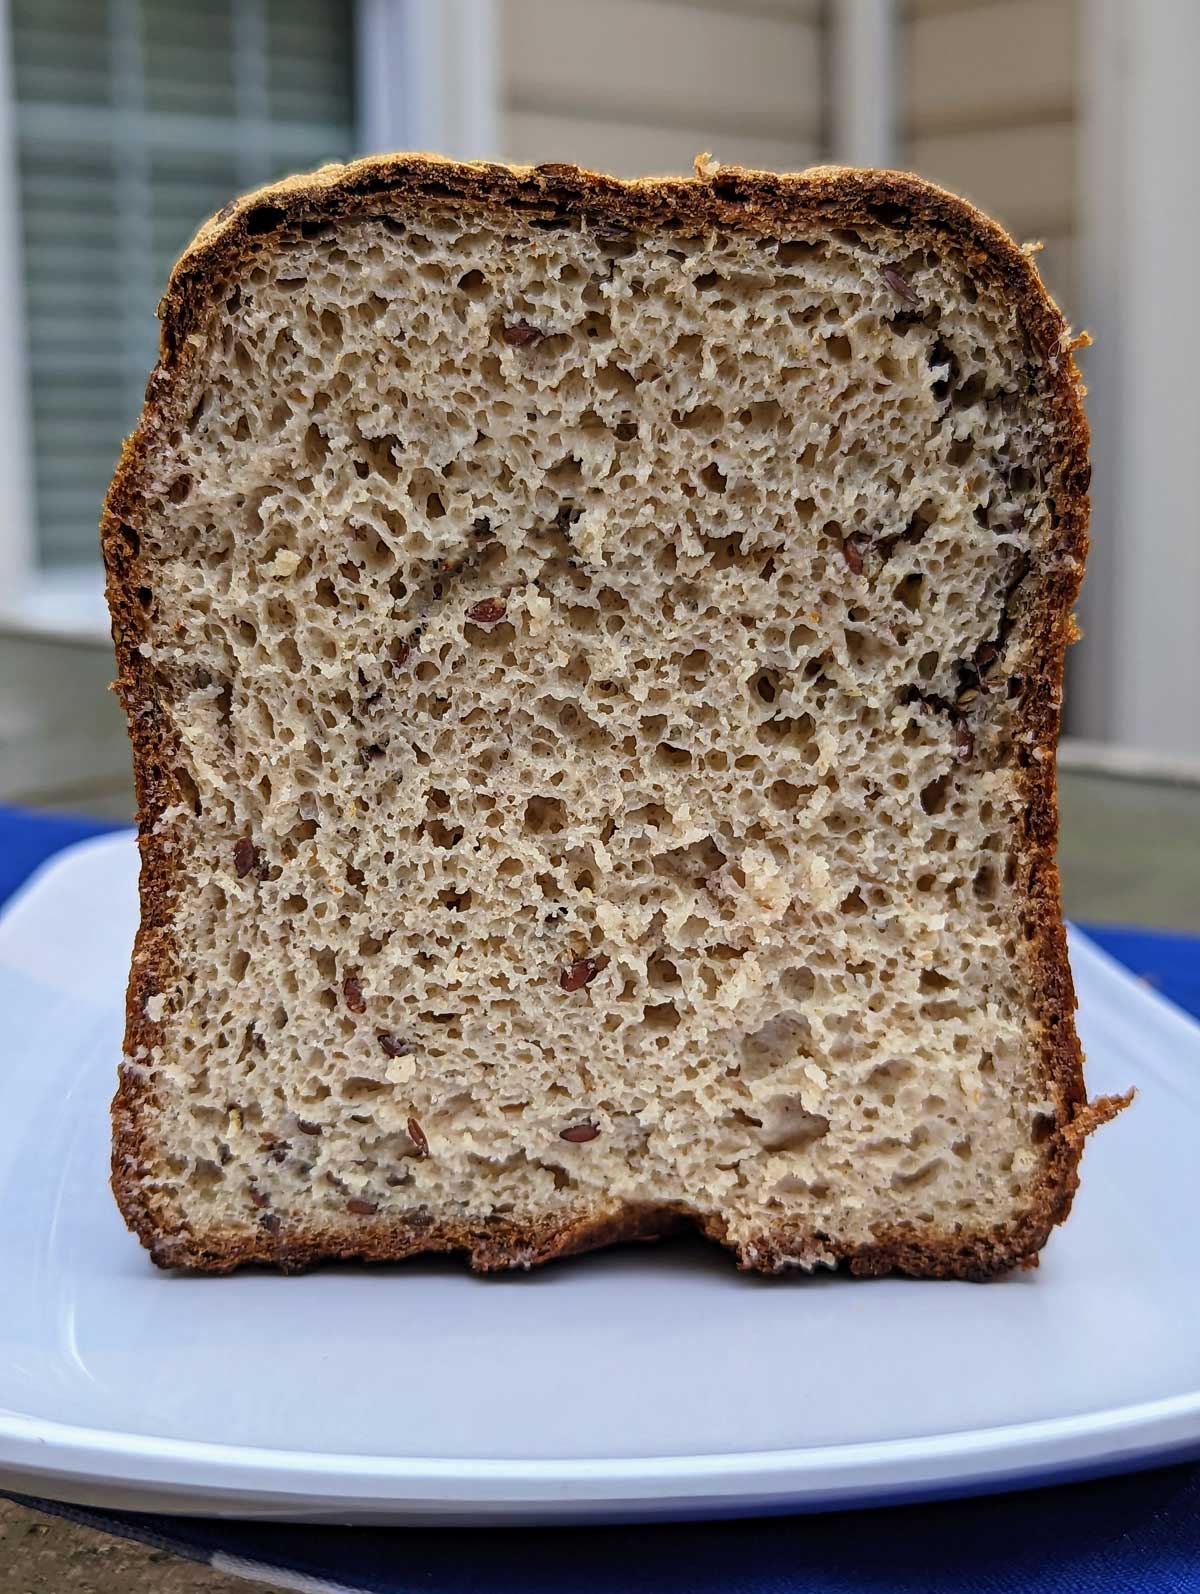 Gluten-free sorghum bread from a 1 pound Pullman